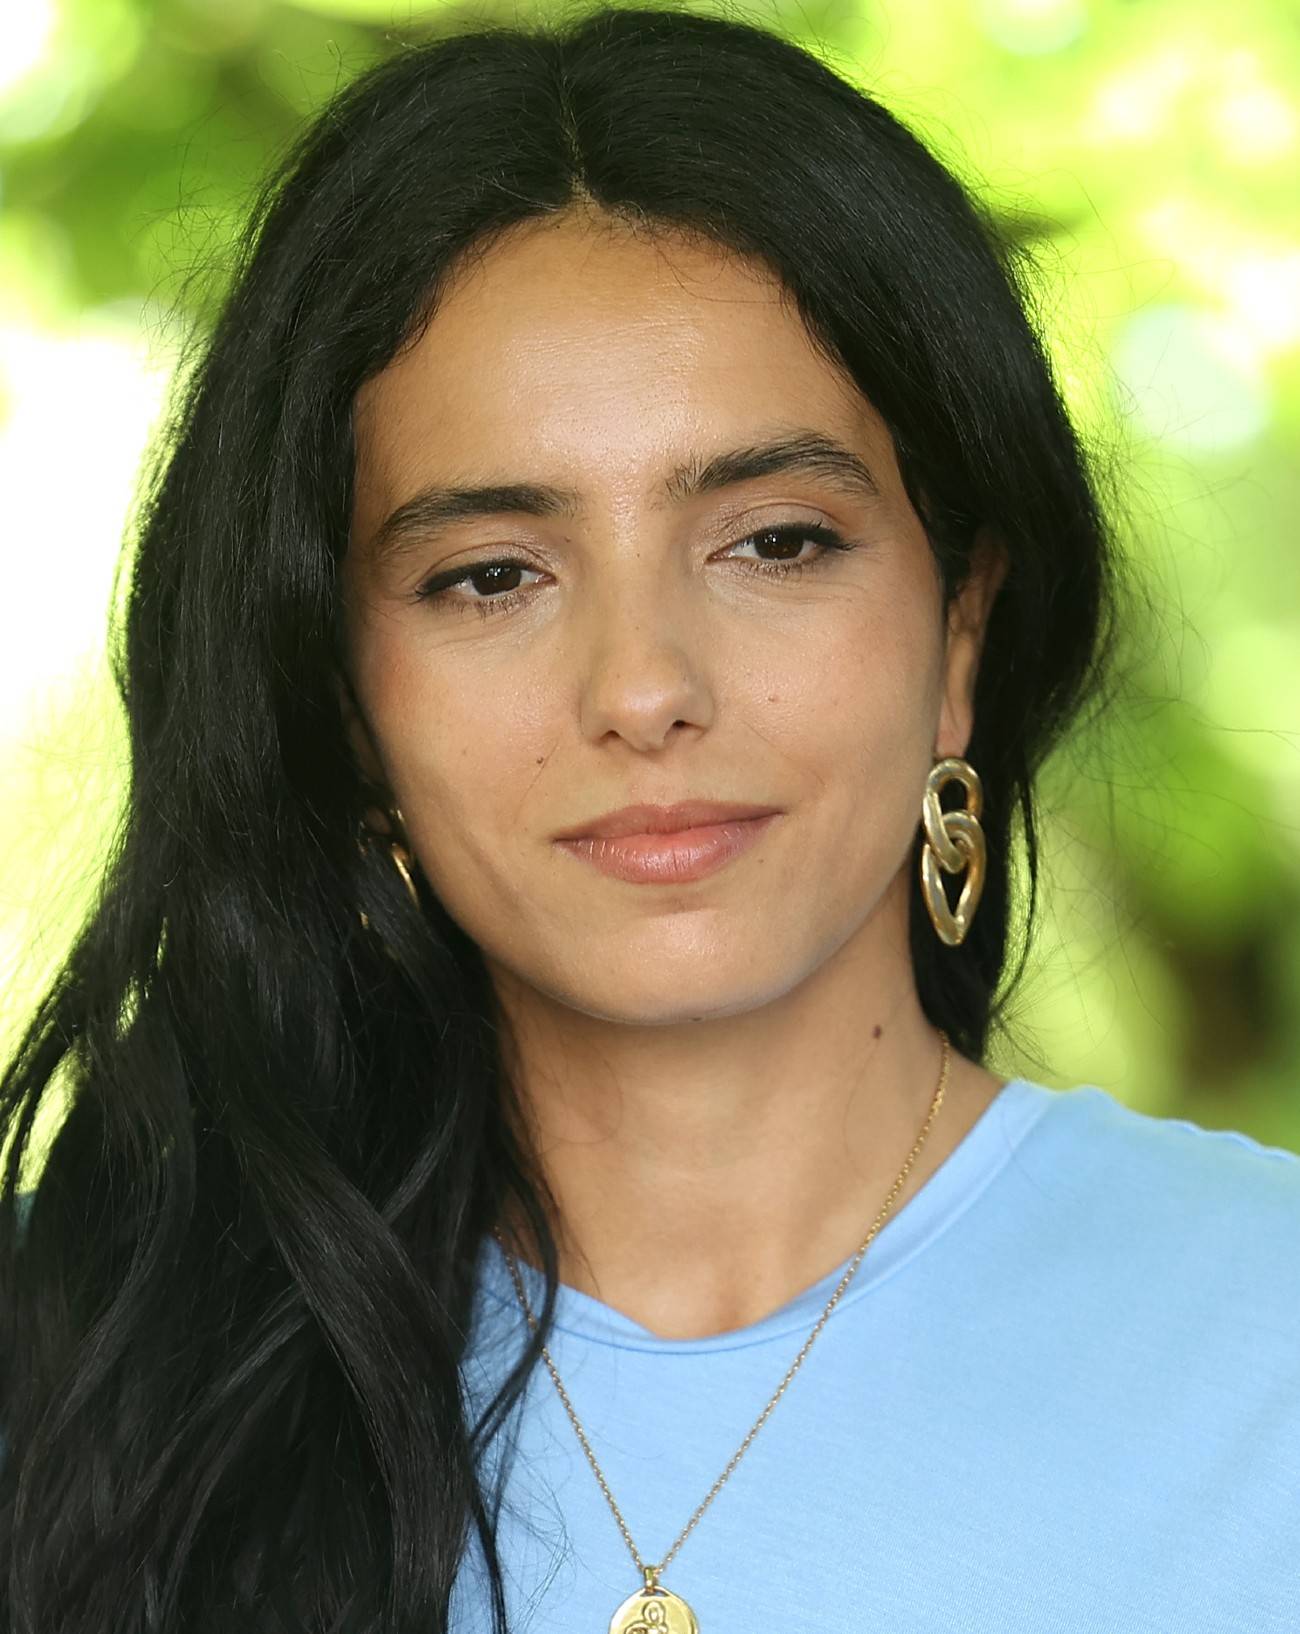 Rencontre avec Hafsia Herzi, héroïne du film Borgo : "Apparemment, j'inspire l'illégalité"